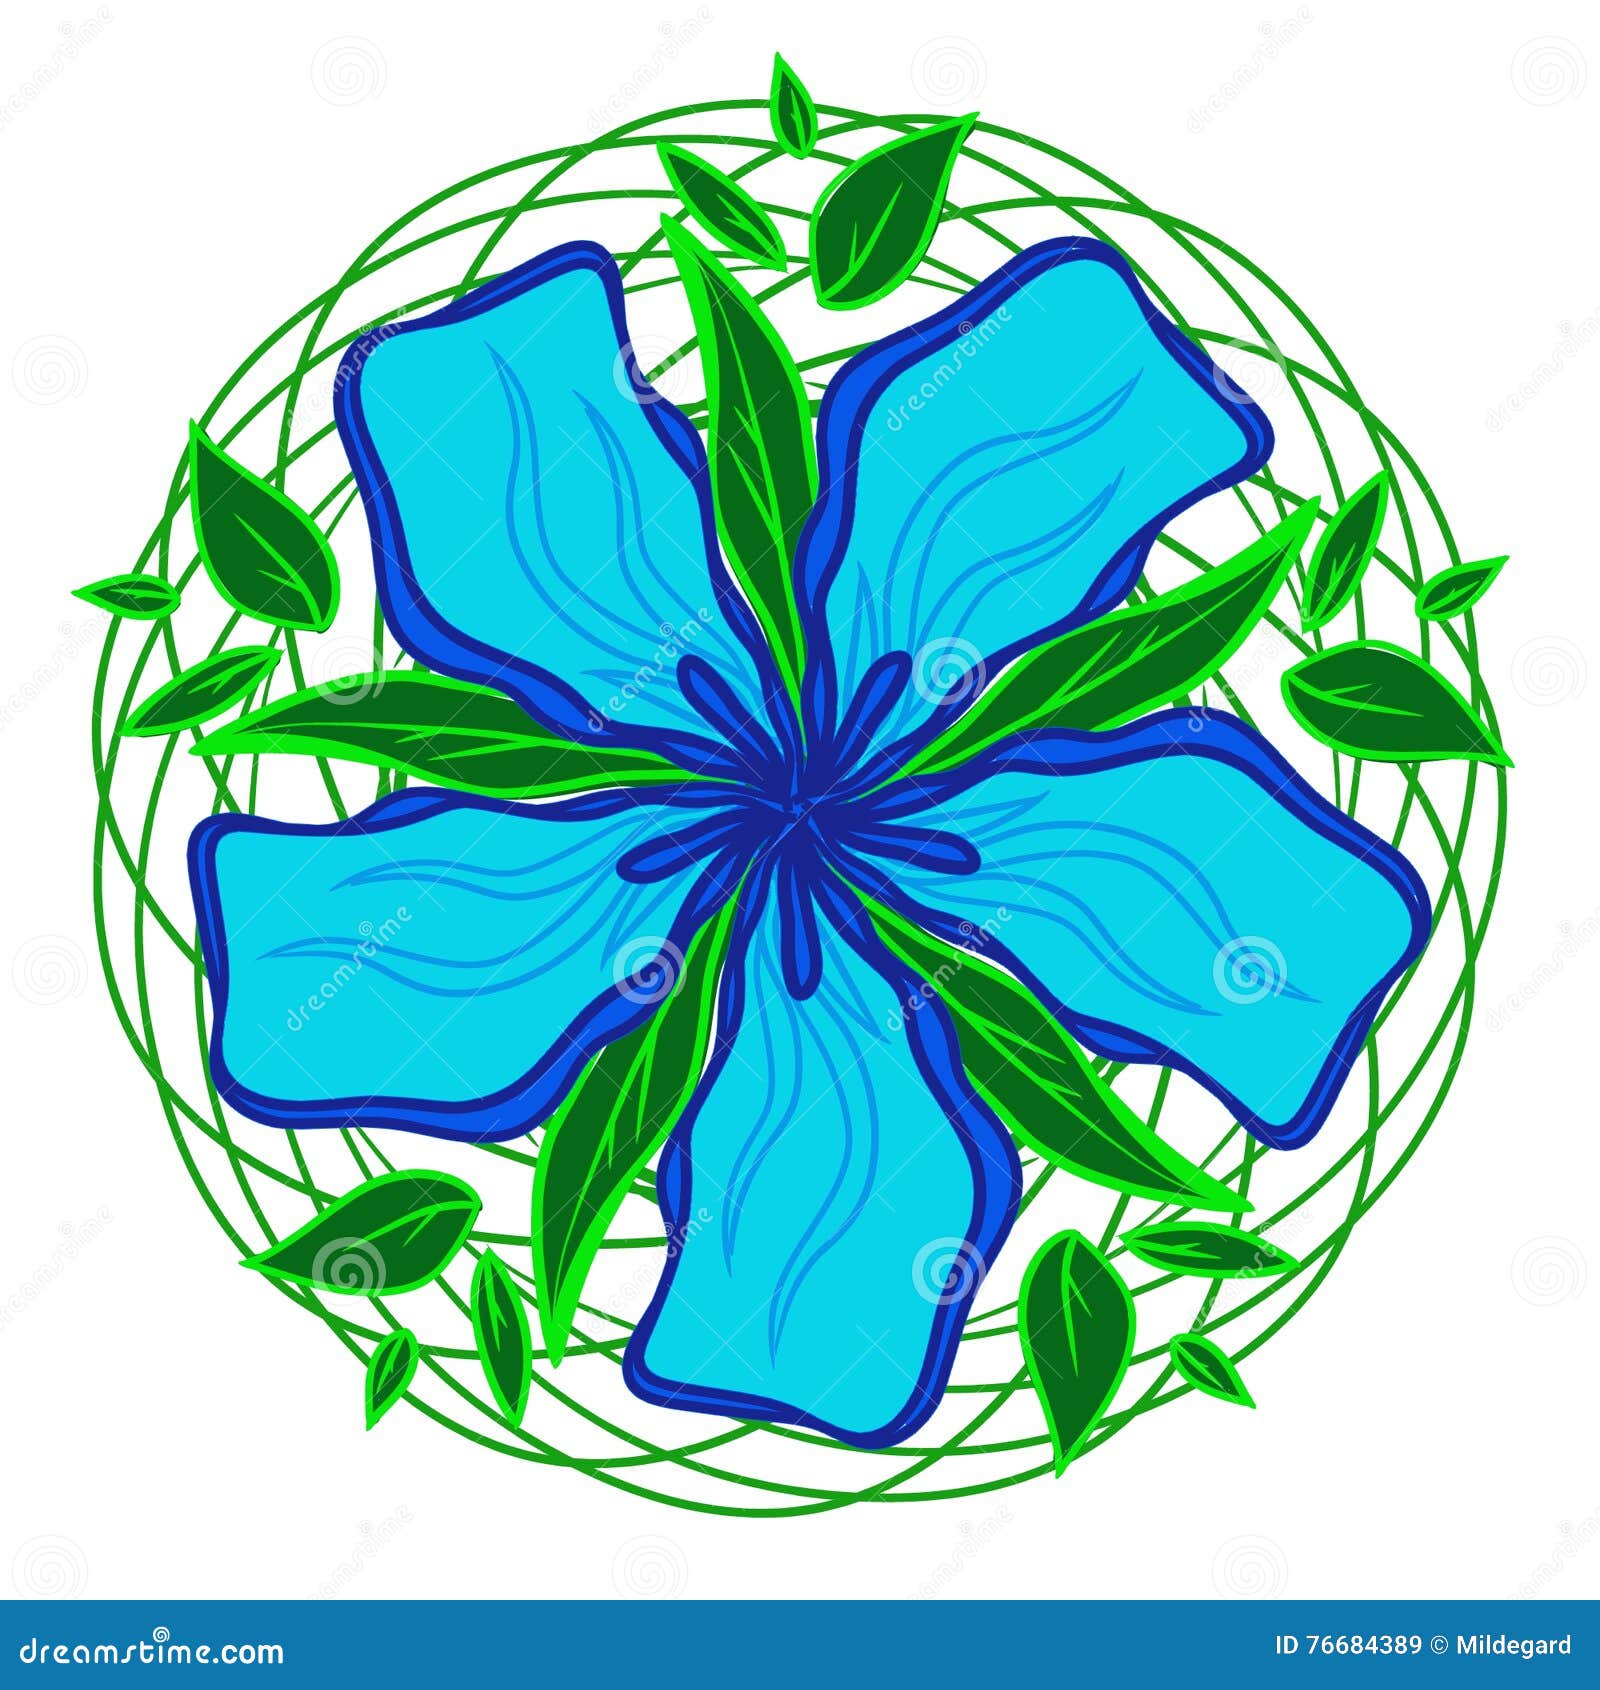 Blue flower drawing stock illustration. Illustration of flower - 76684389